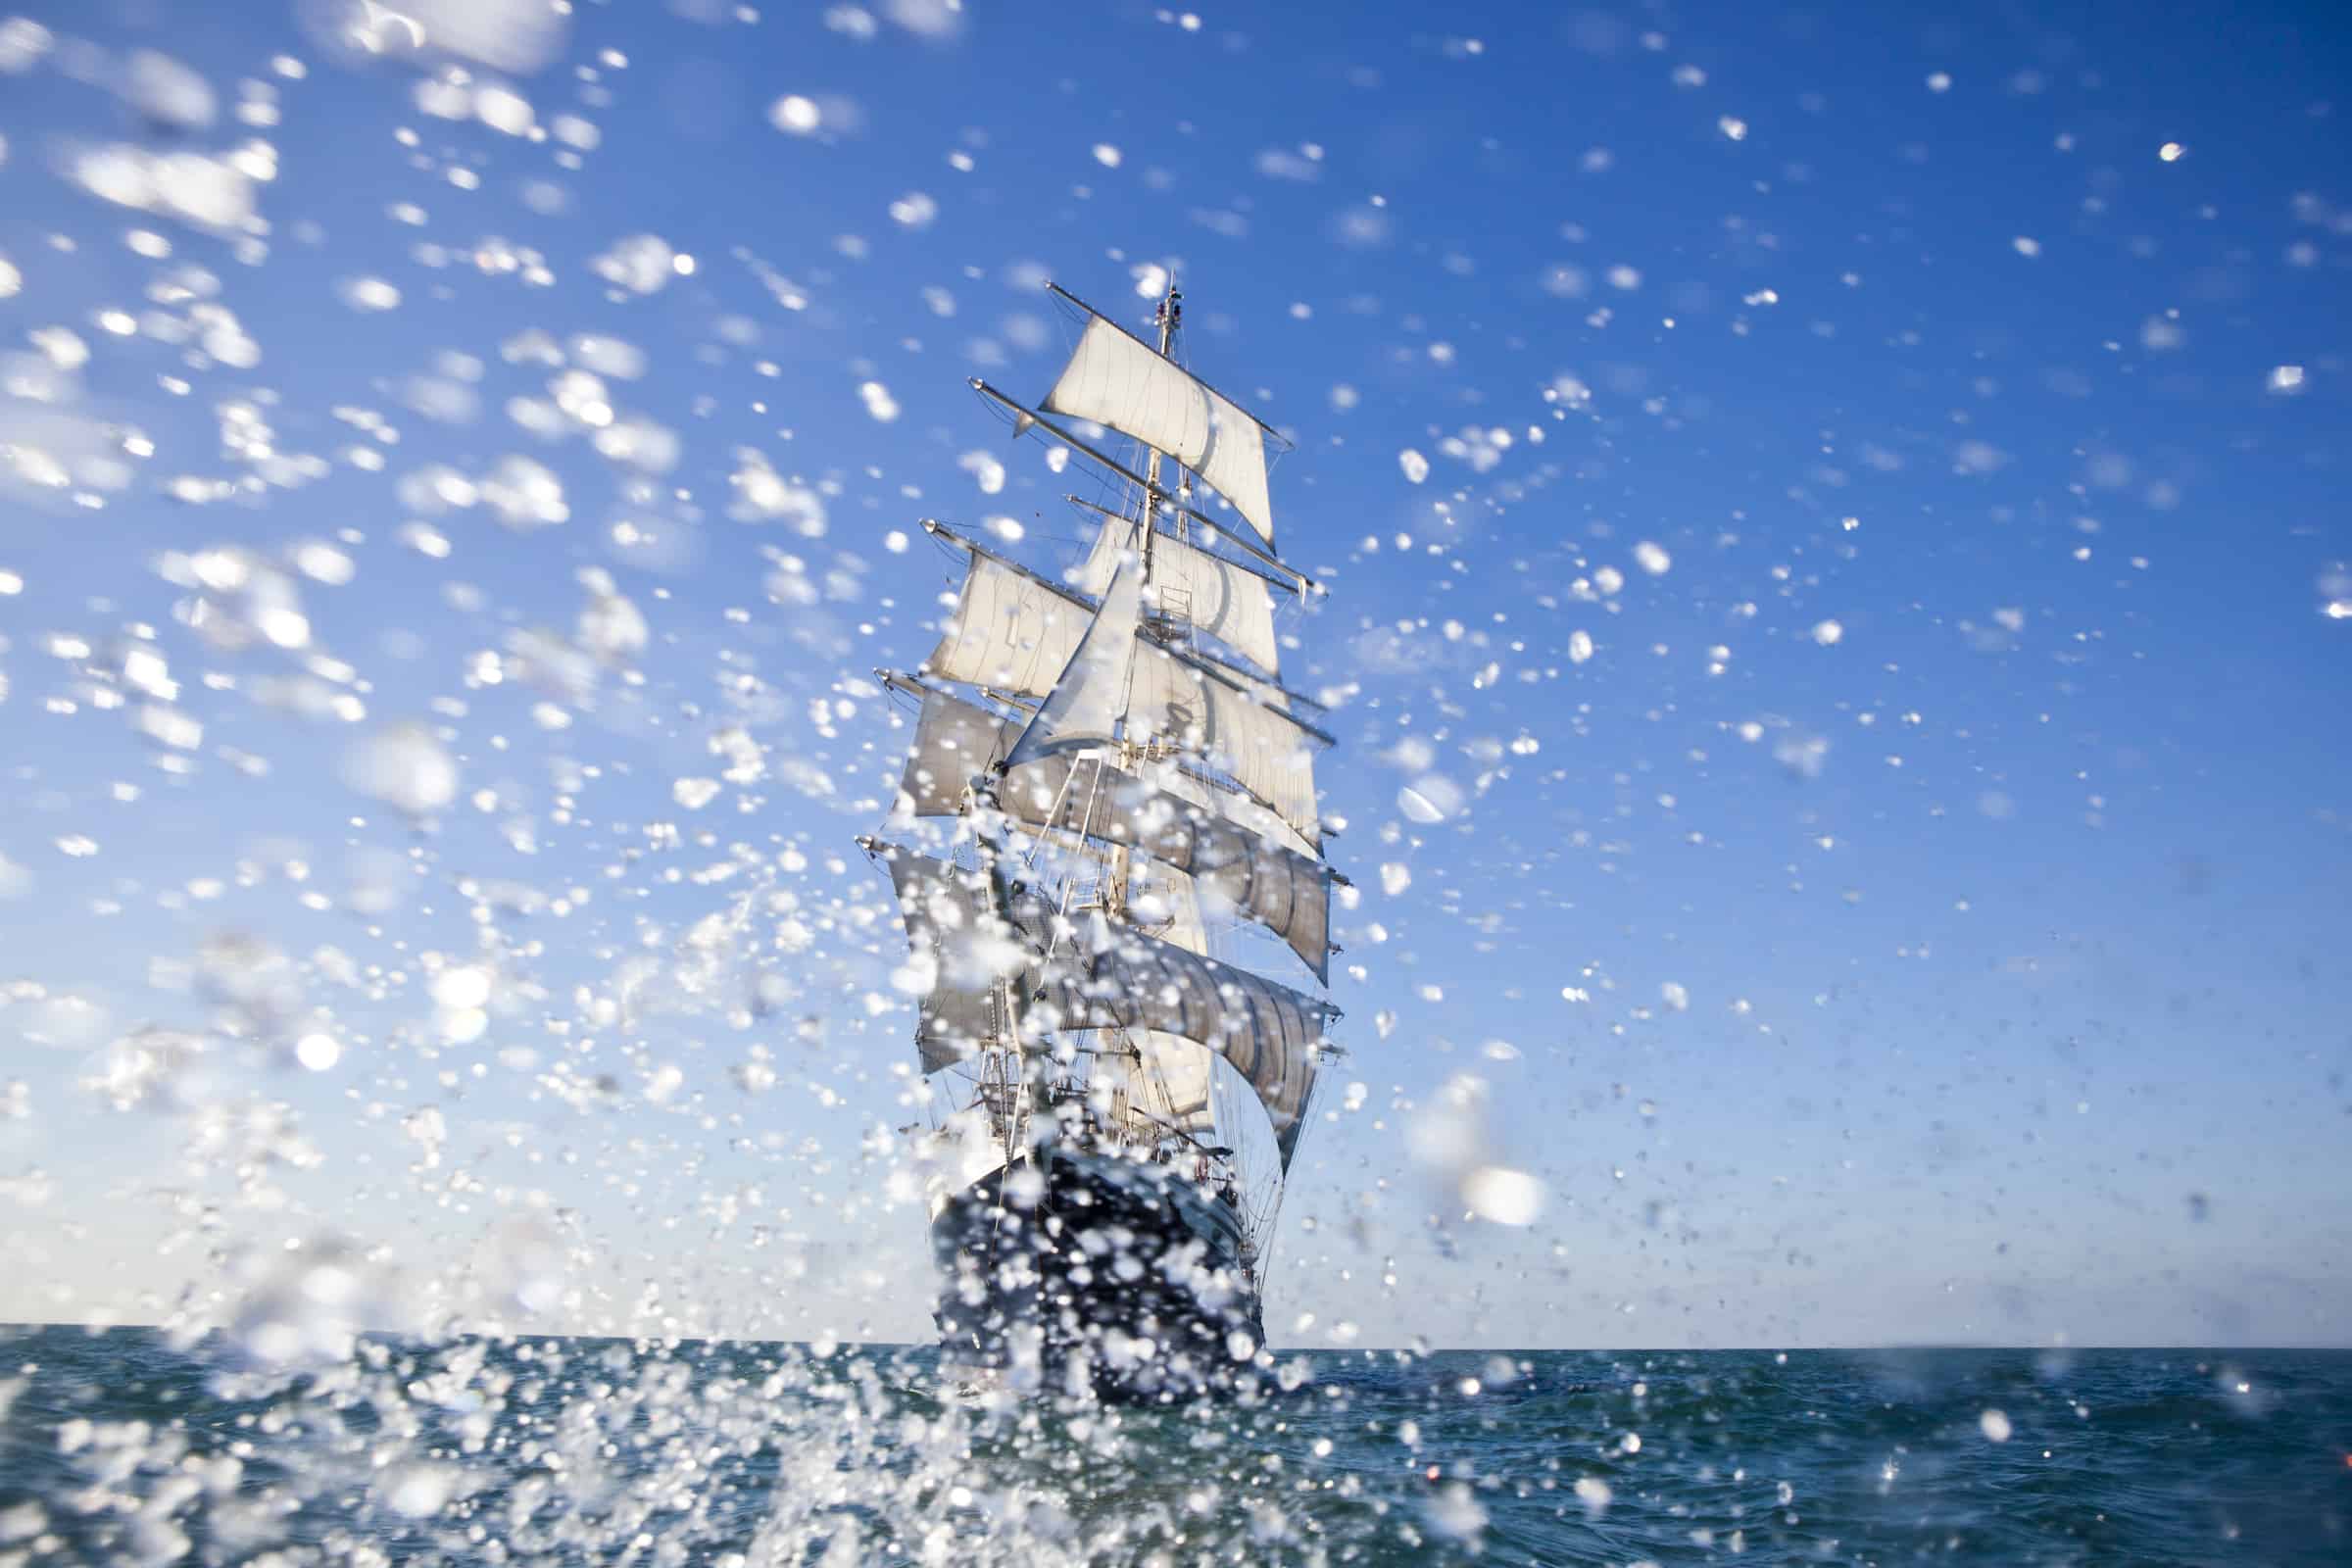 Sail on Tall ship Tenacious with Classic Sailing